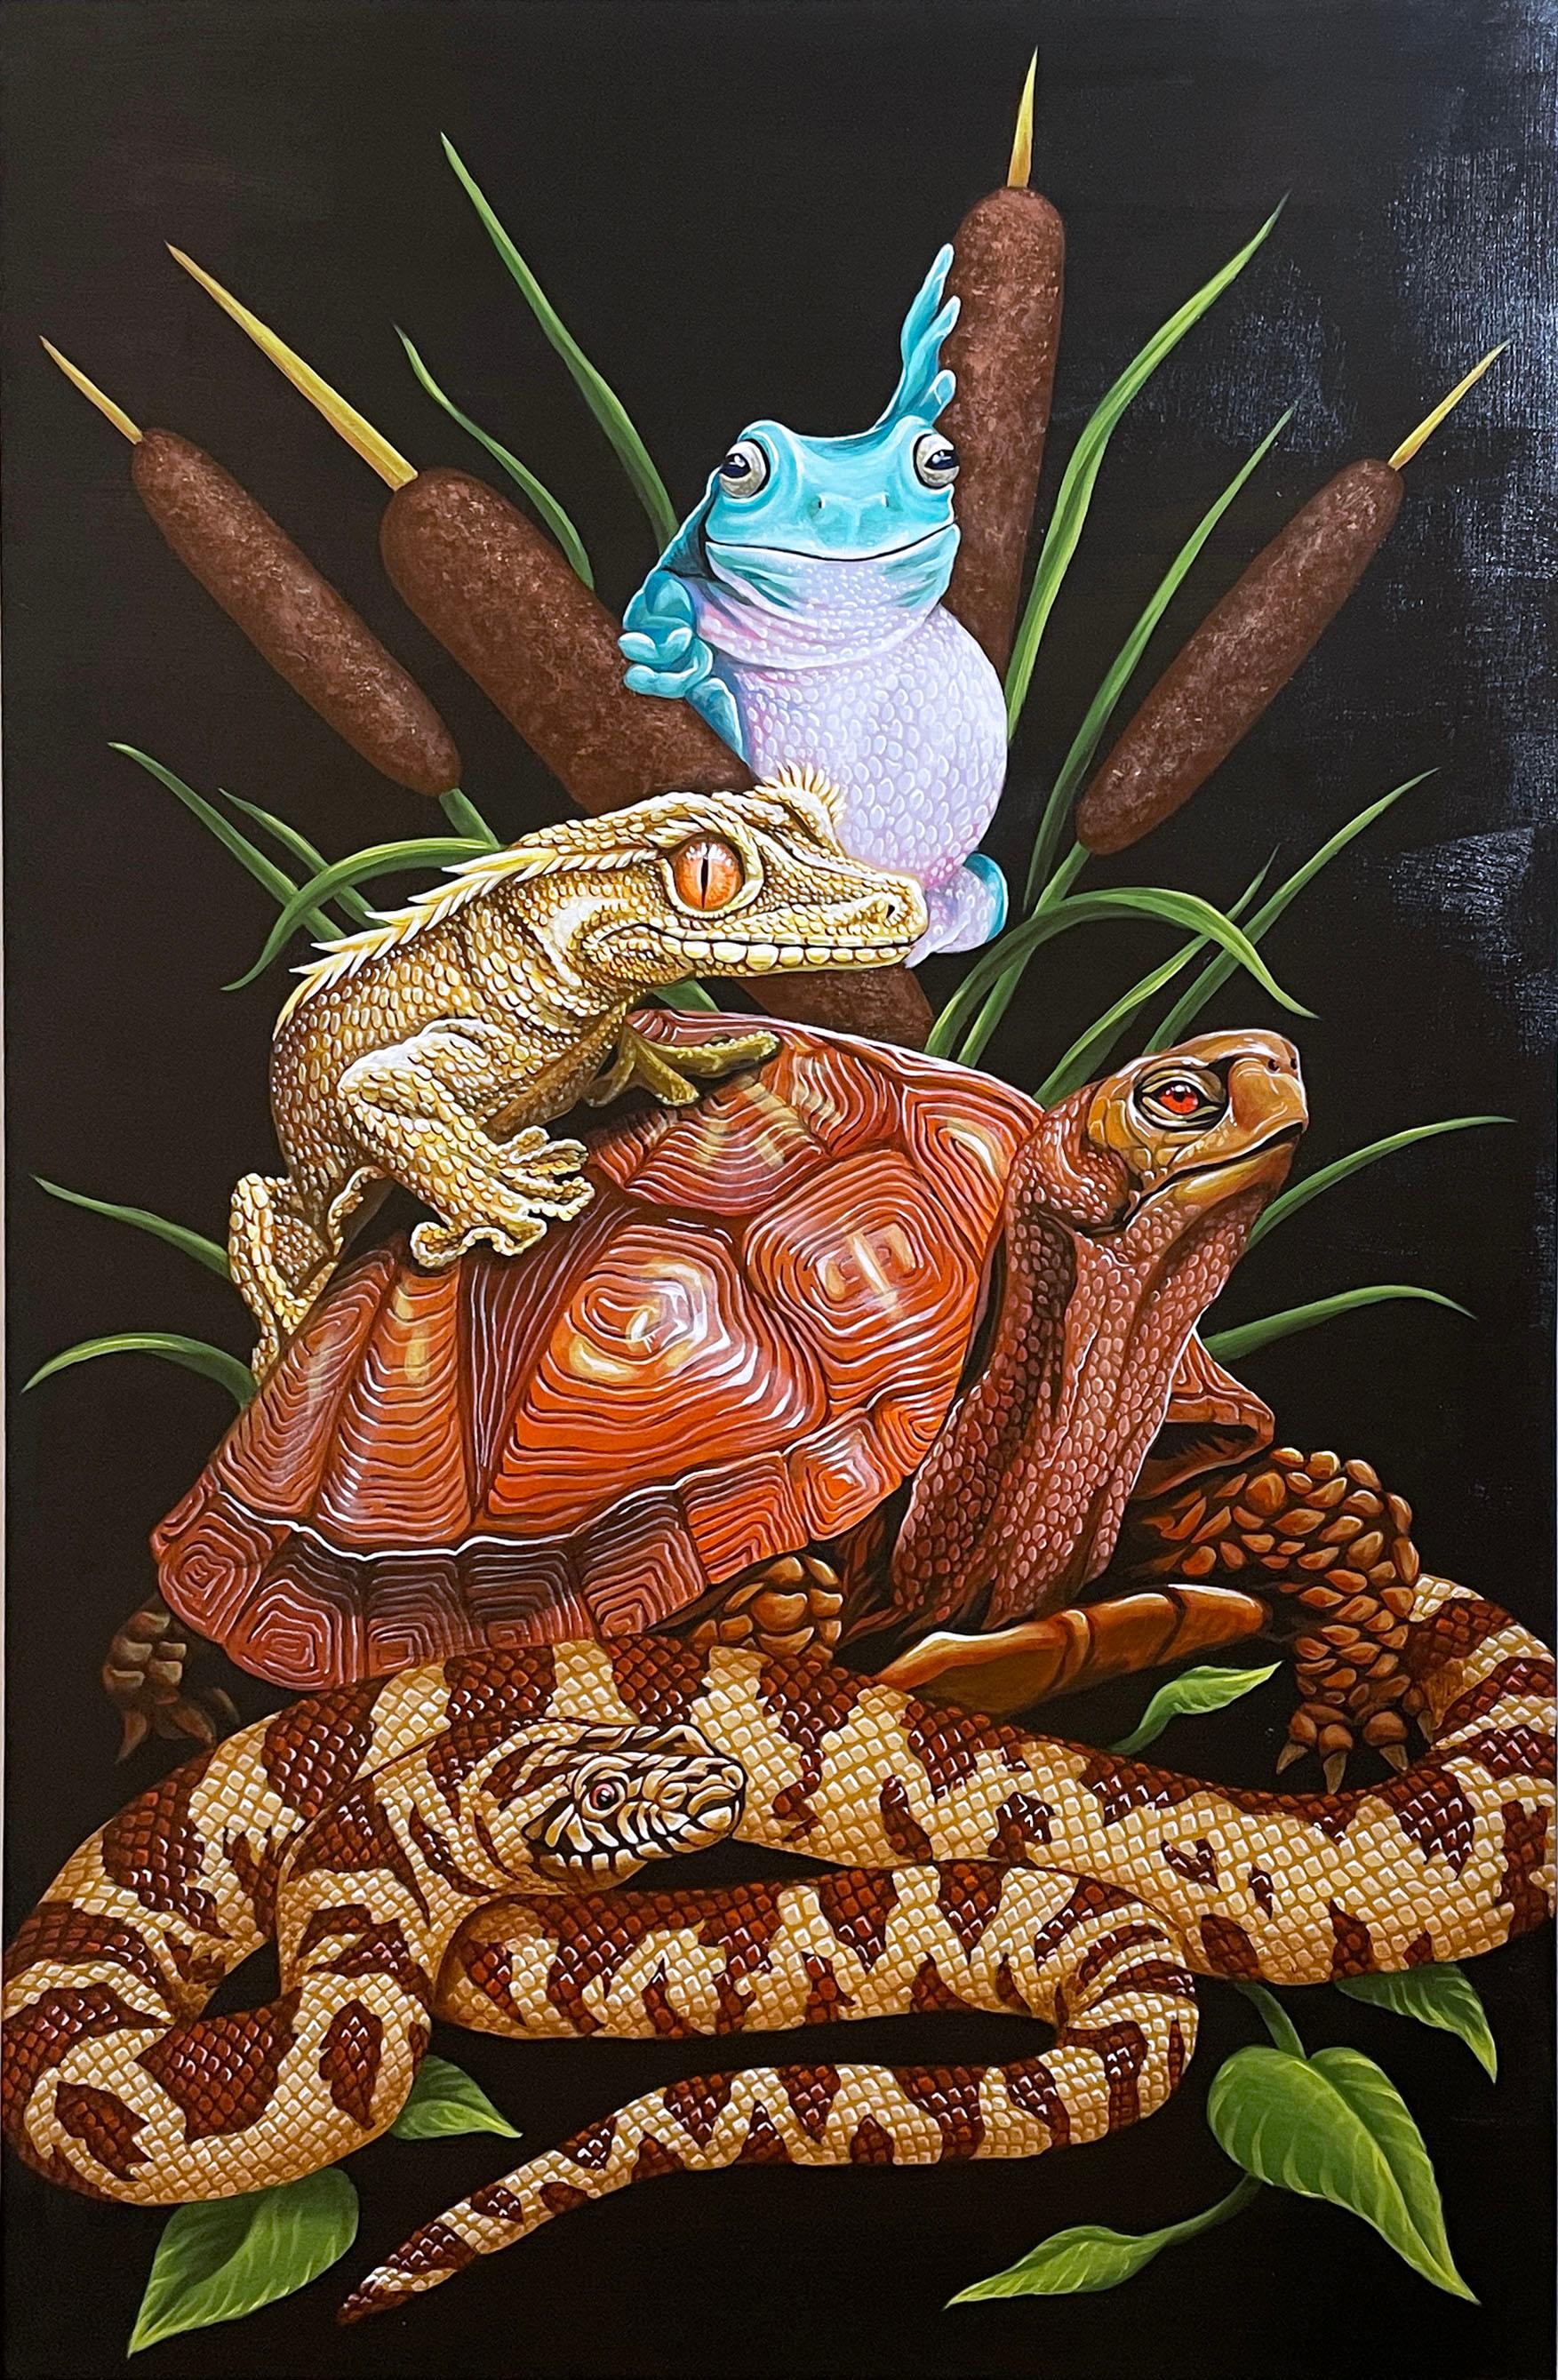 Menagerie (2022) by Justin Suarez / Aerosol Kingdom, lizard, frog, snake, turtle